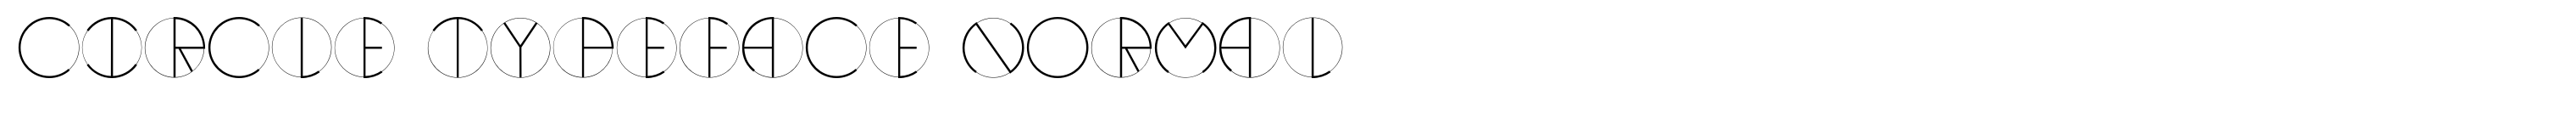 Circle typeface Normal